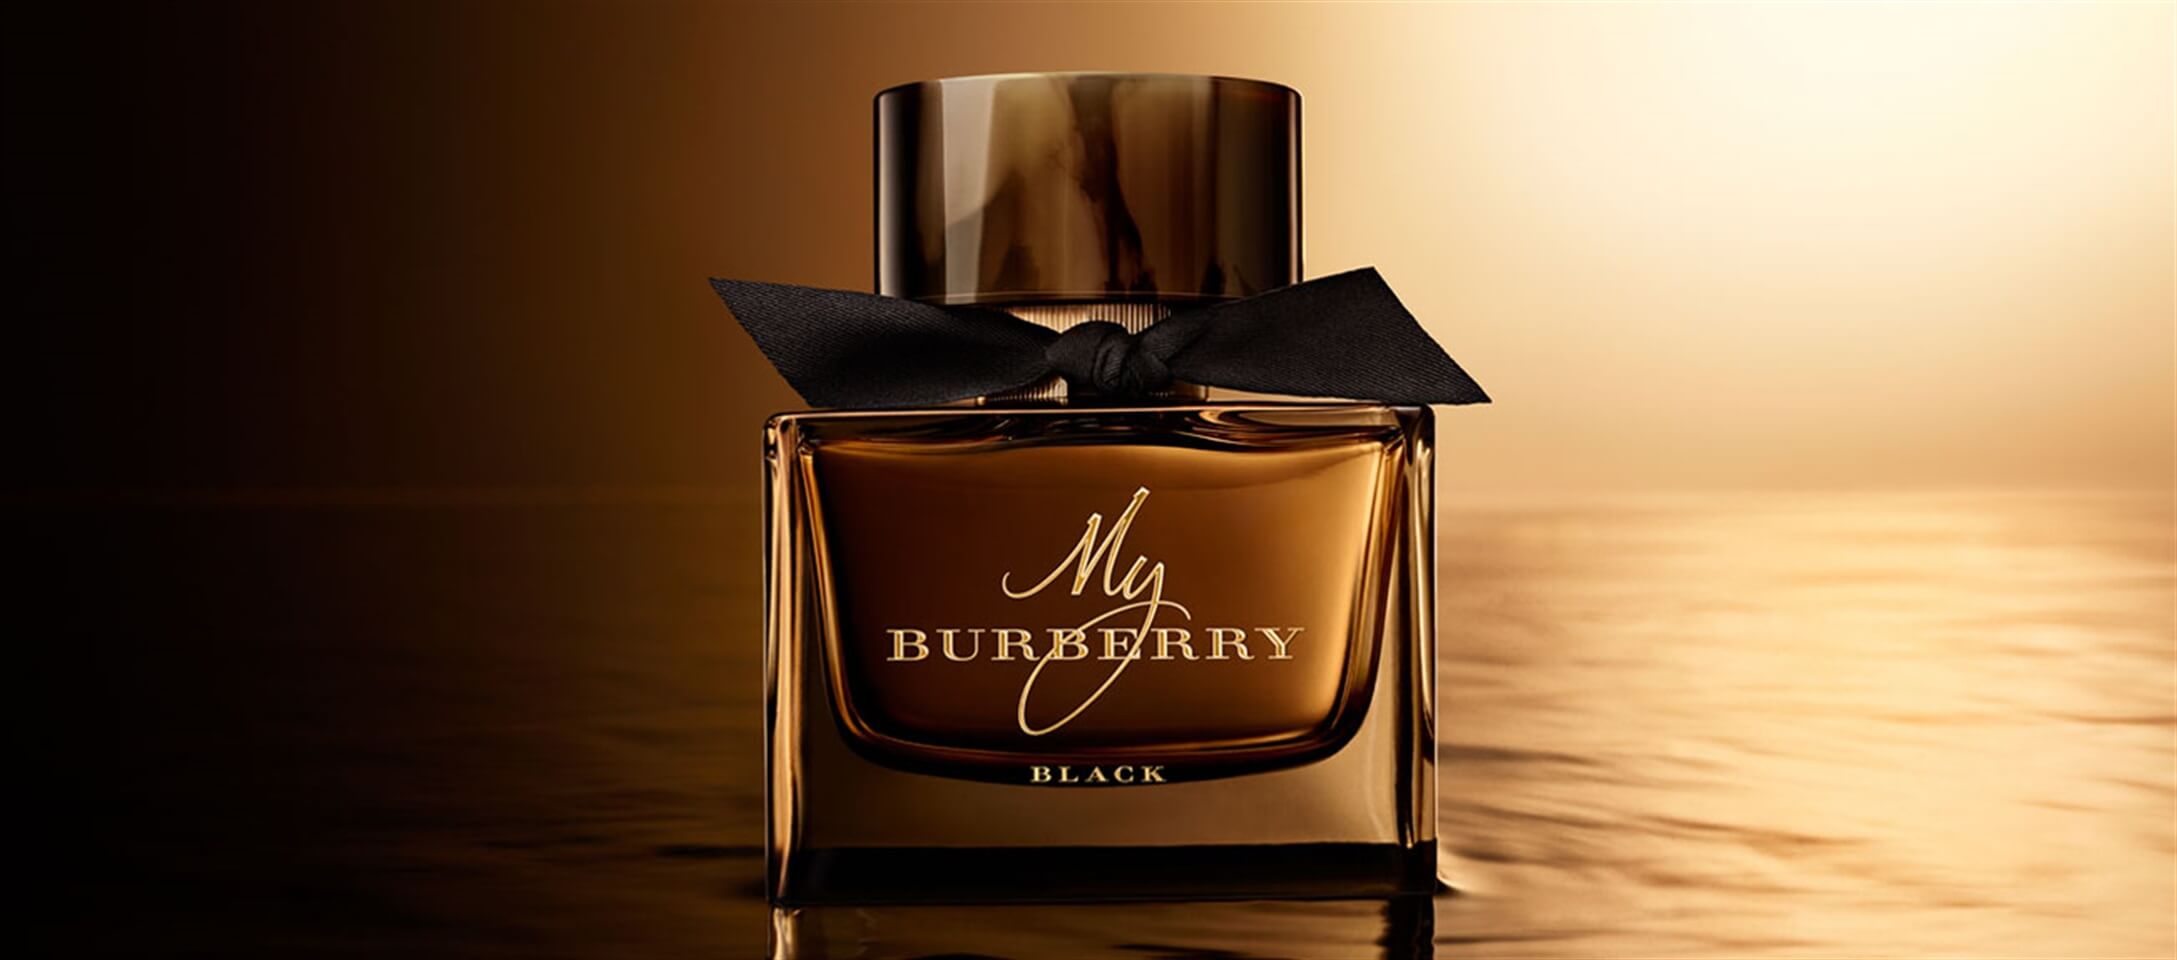 BURBERRY, BURBERRY My Burberry Black Parfum 30ml., My Burberry Black Parfum 30 ml.,น้ําหอม burberry,น้ําหอม burberry ของแท้